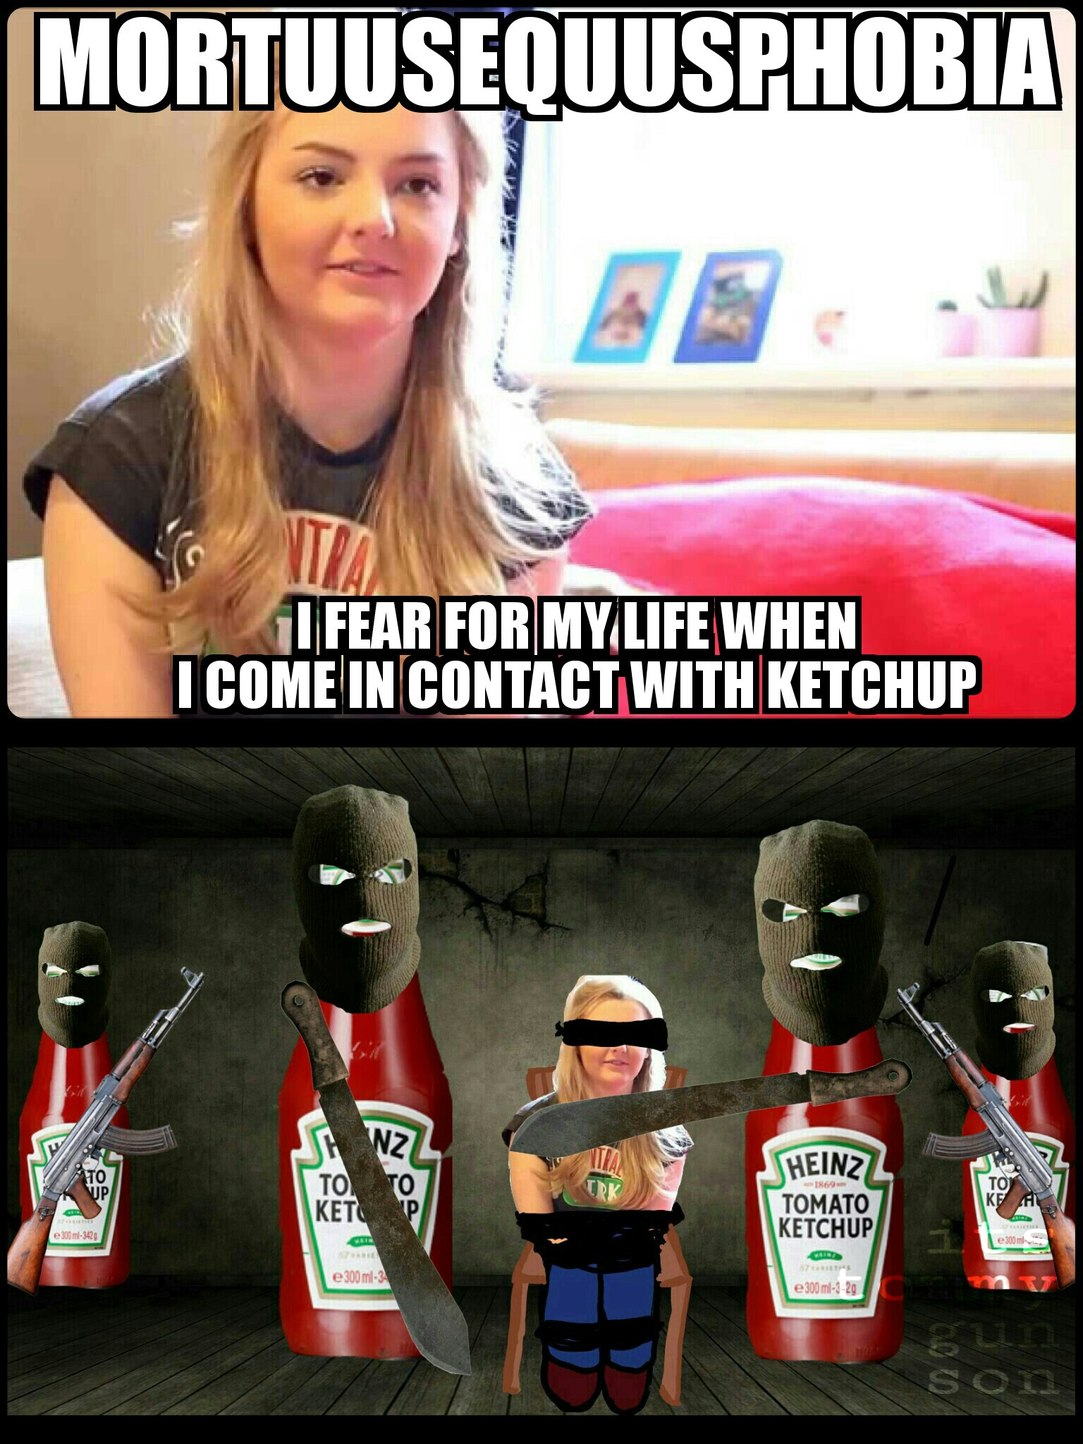 She needs to ketchup to reality - meme